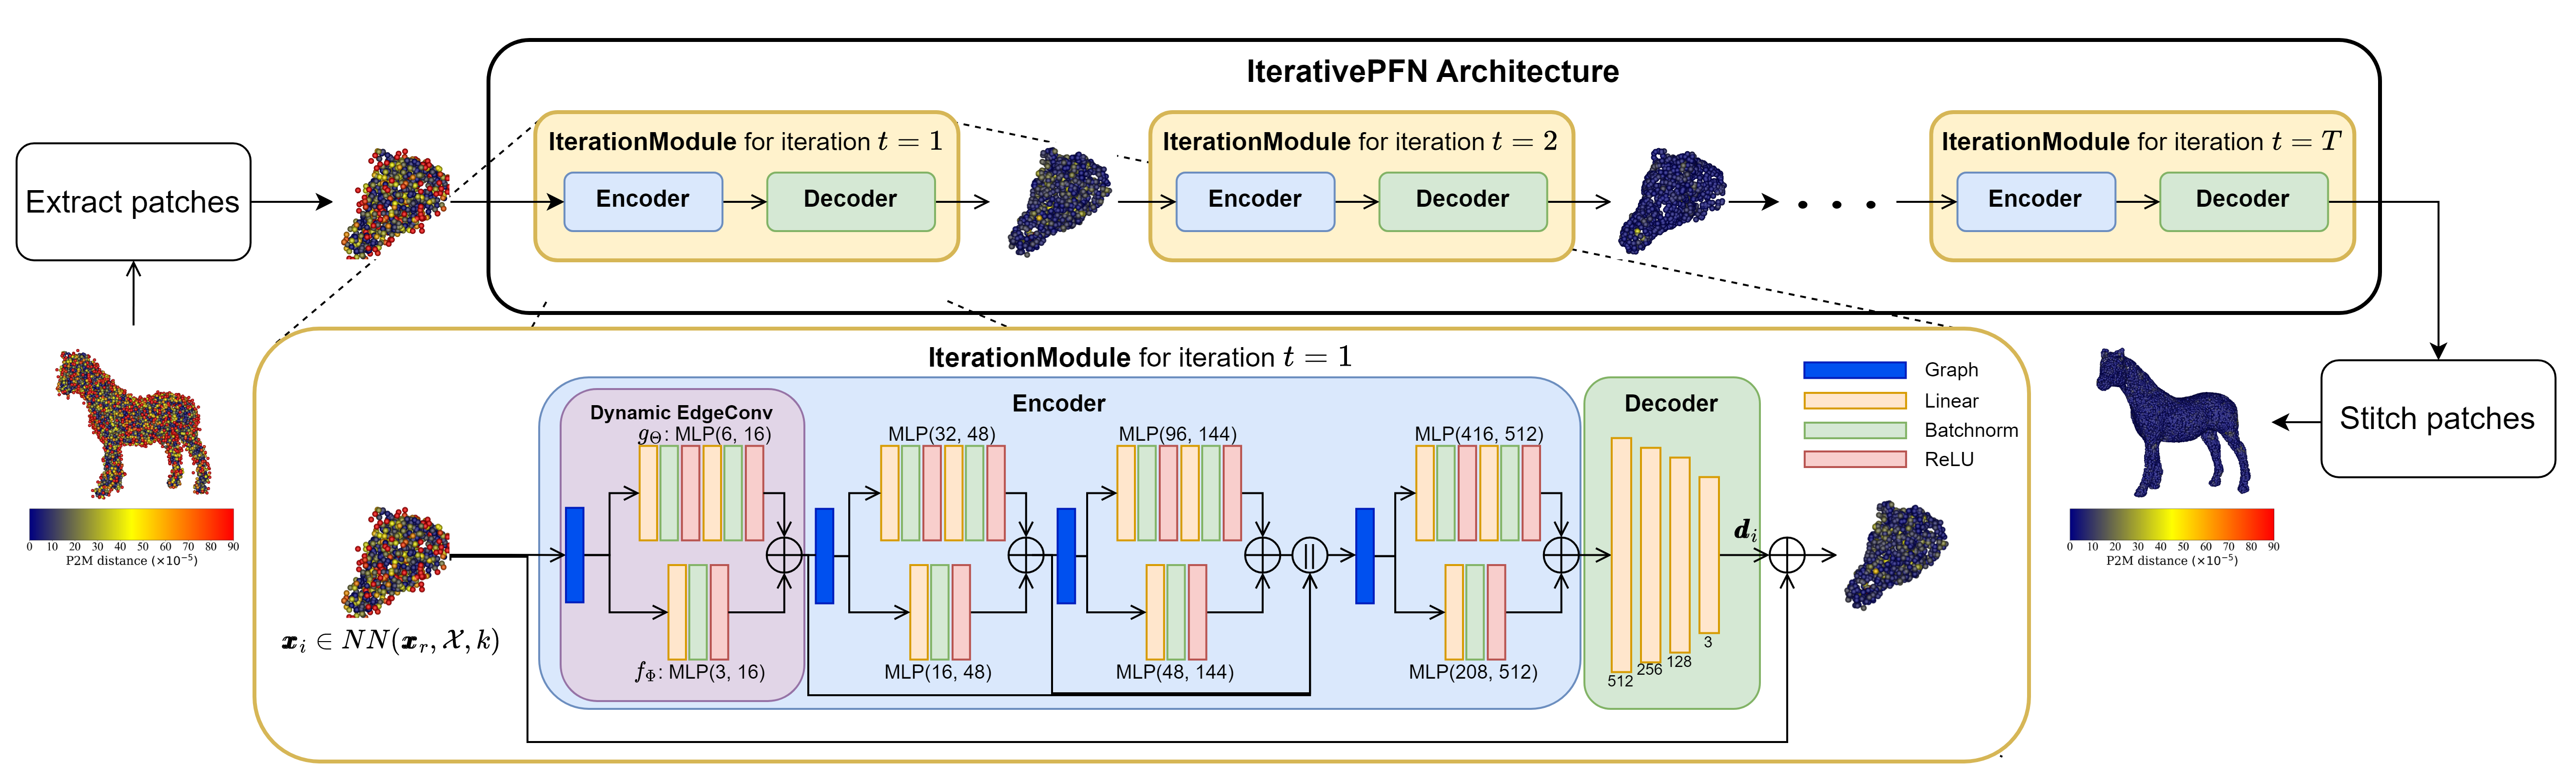 IterativePFN network